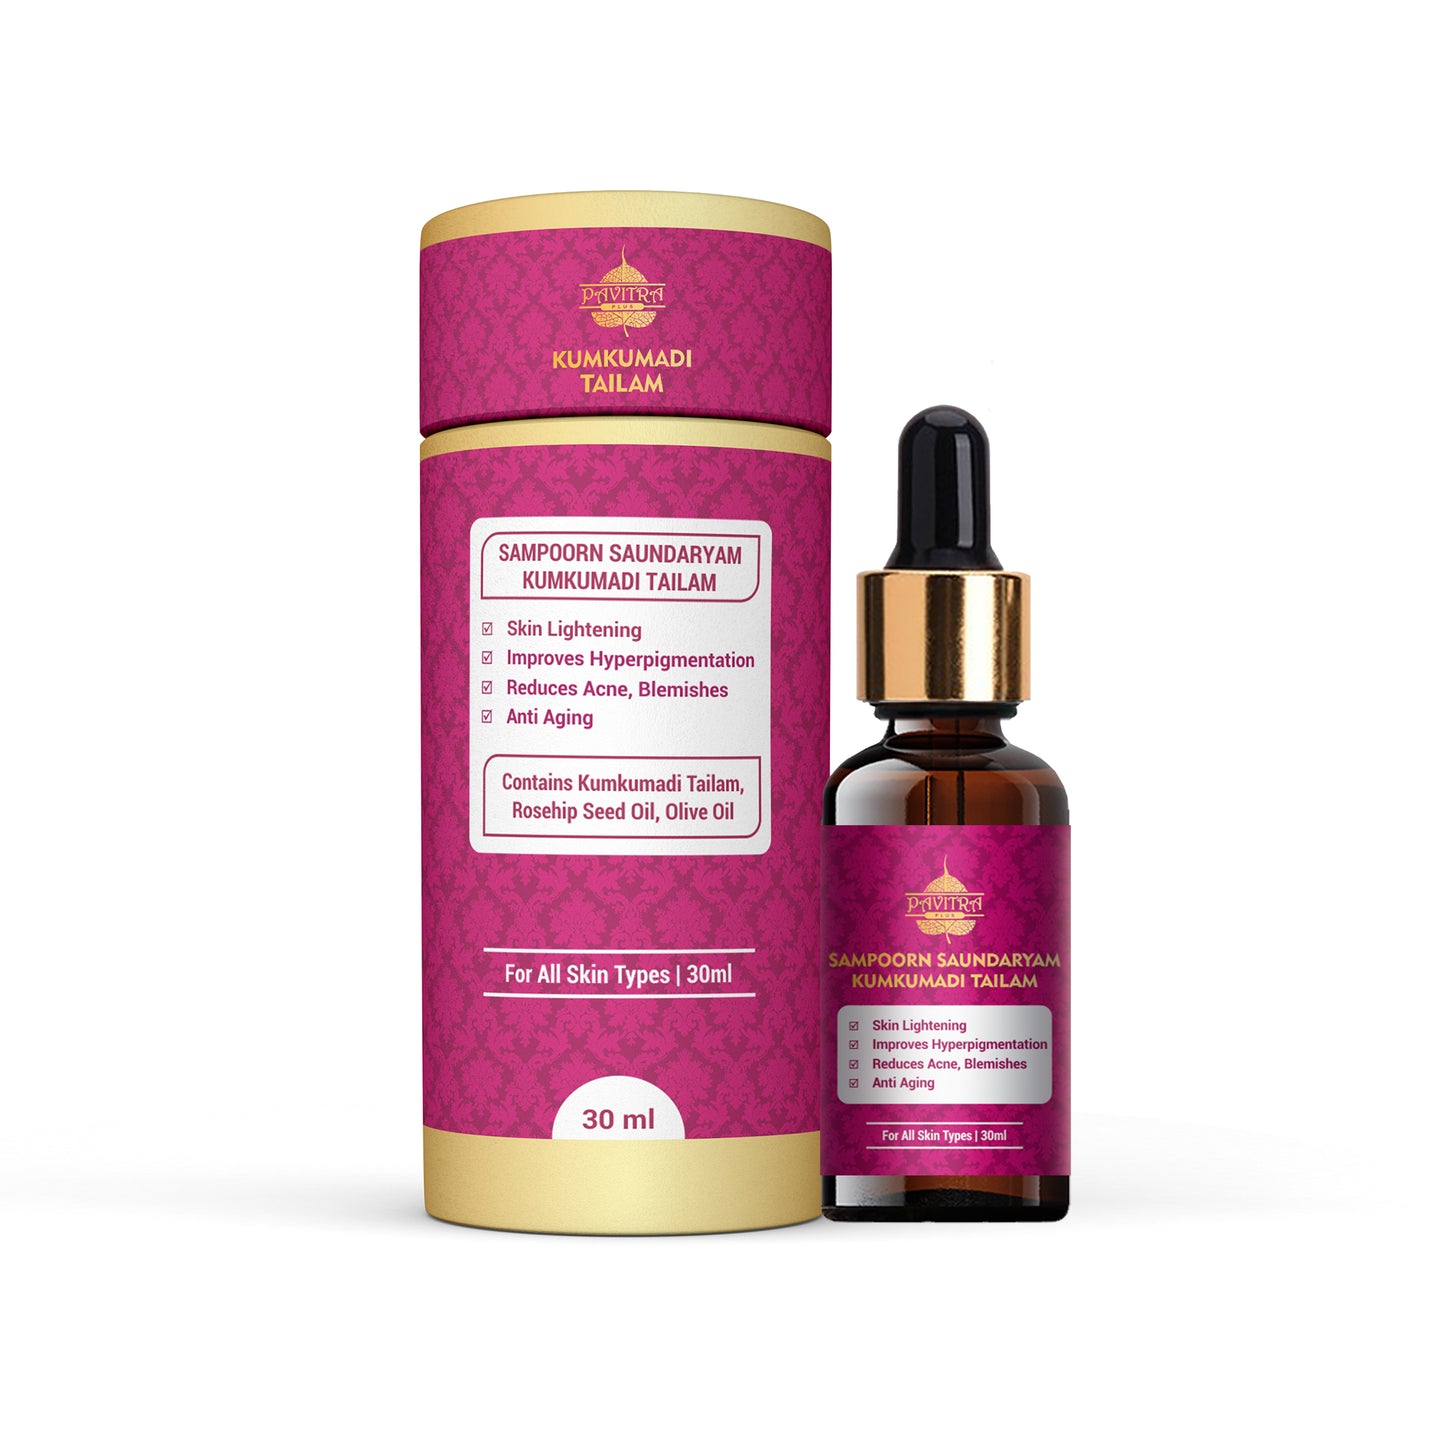 Pavitraplus Sampoorn Saundaryam Kumkumadi Tailam (Oil) for Glowing & Youthful Skin -30ml